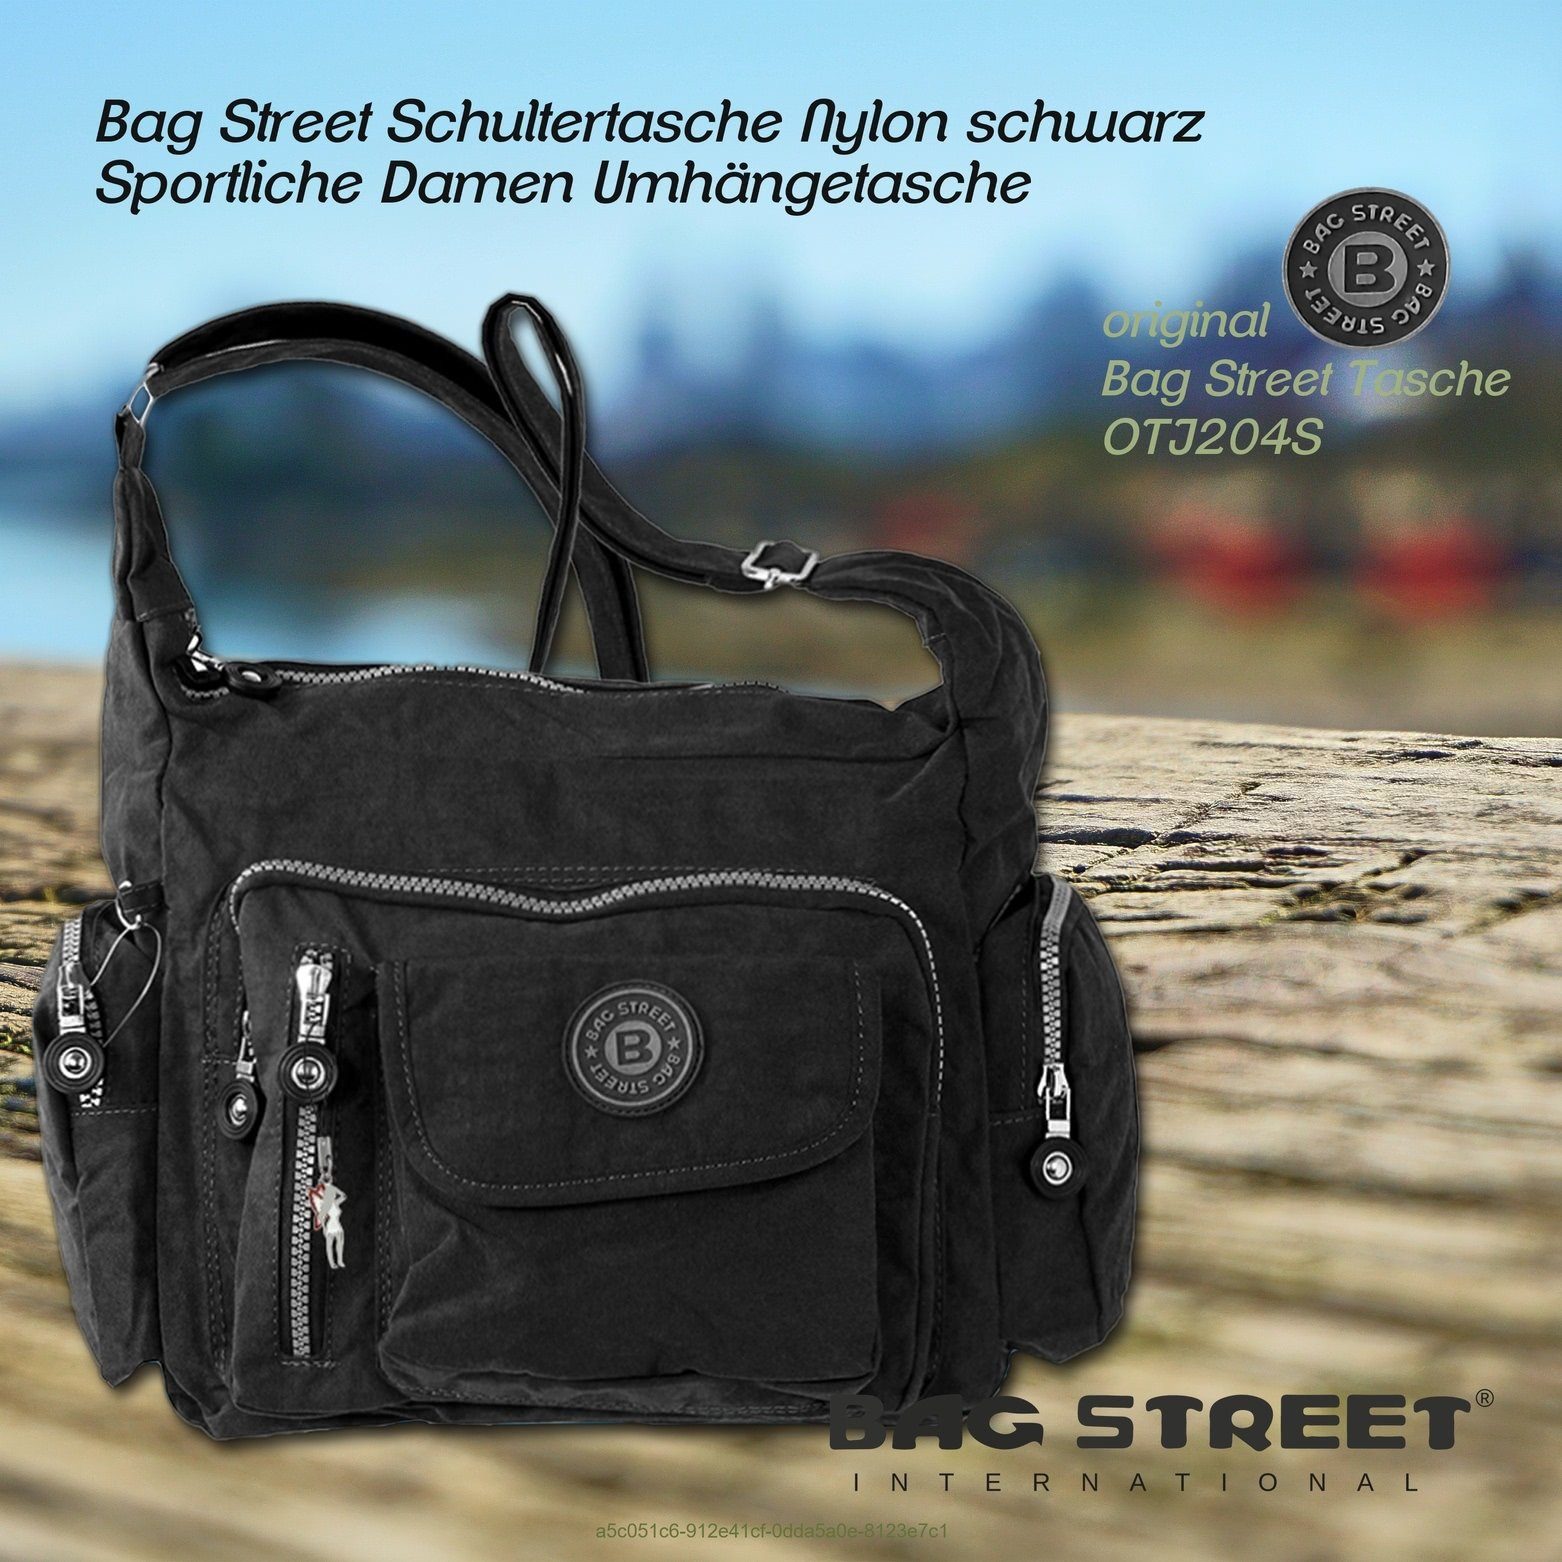 BAG STREET Schultertasche Bag Schultertasche (Schultertasche), schwarz Street x Damenhandtasche 30cm Nylon, 22cm ca. Schultertasche ca